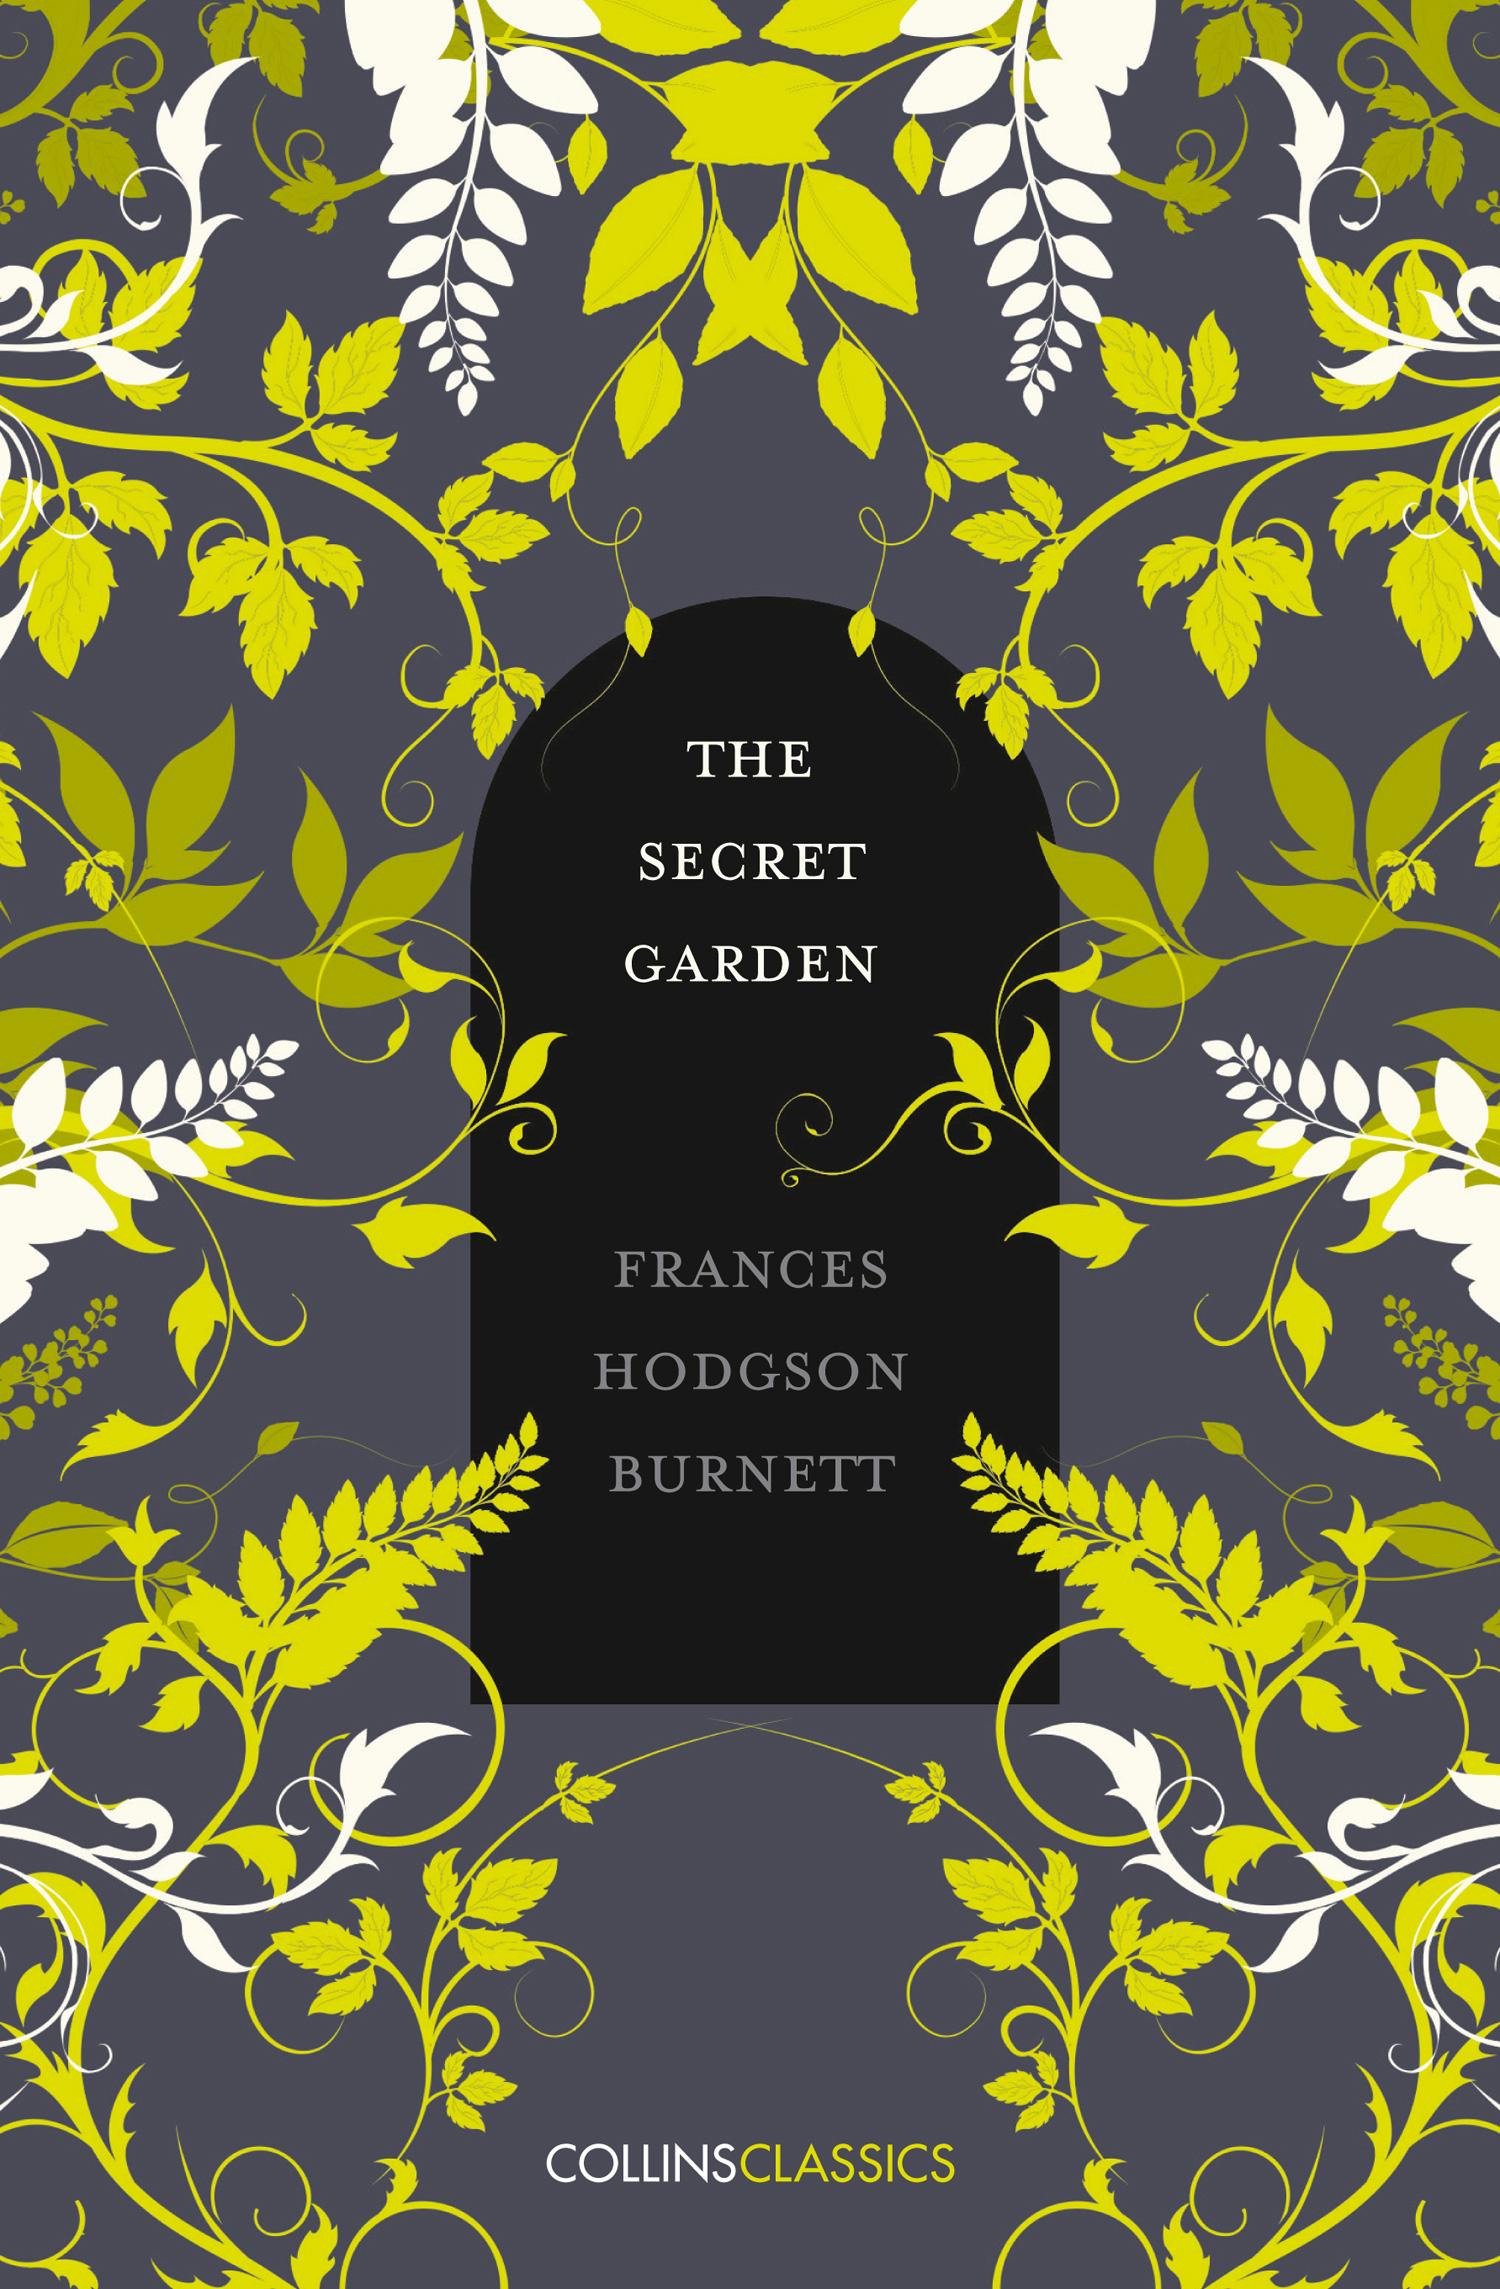 The Secret Garden / Frances Hodgson Burnett / Taschenbuch / Kartoniert / Broschiert / Englisch / 2017 / HarperCollins Publishers / EAN 9780008195557 - Hodgson Burnett, Frances